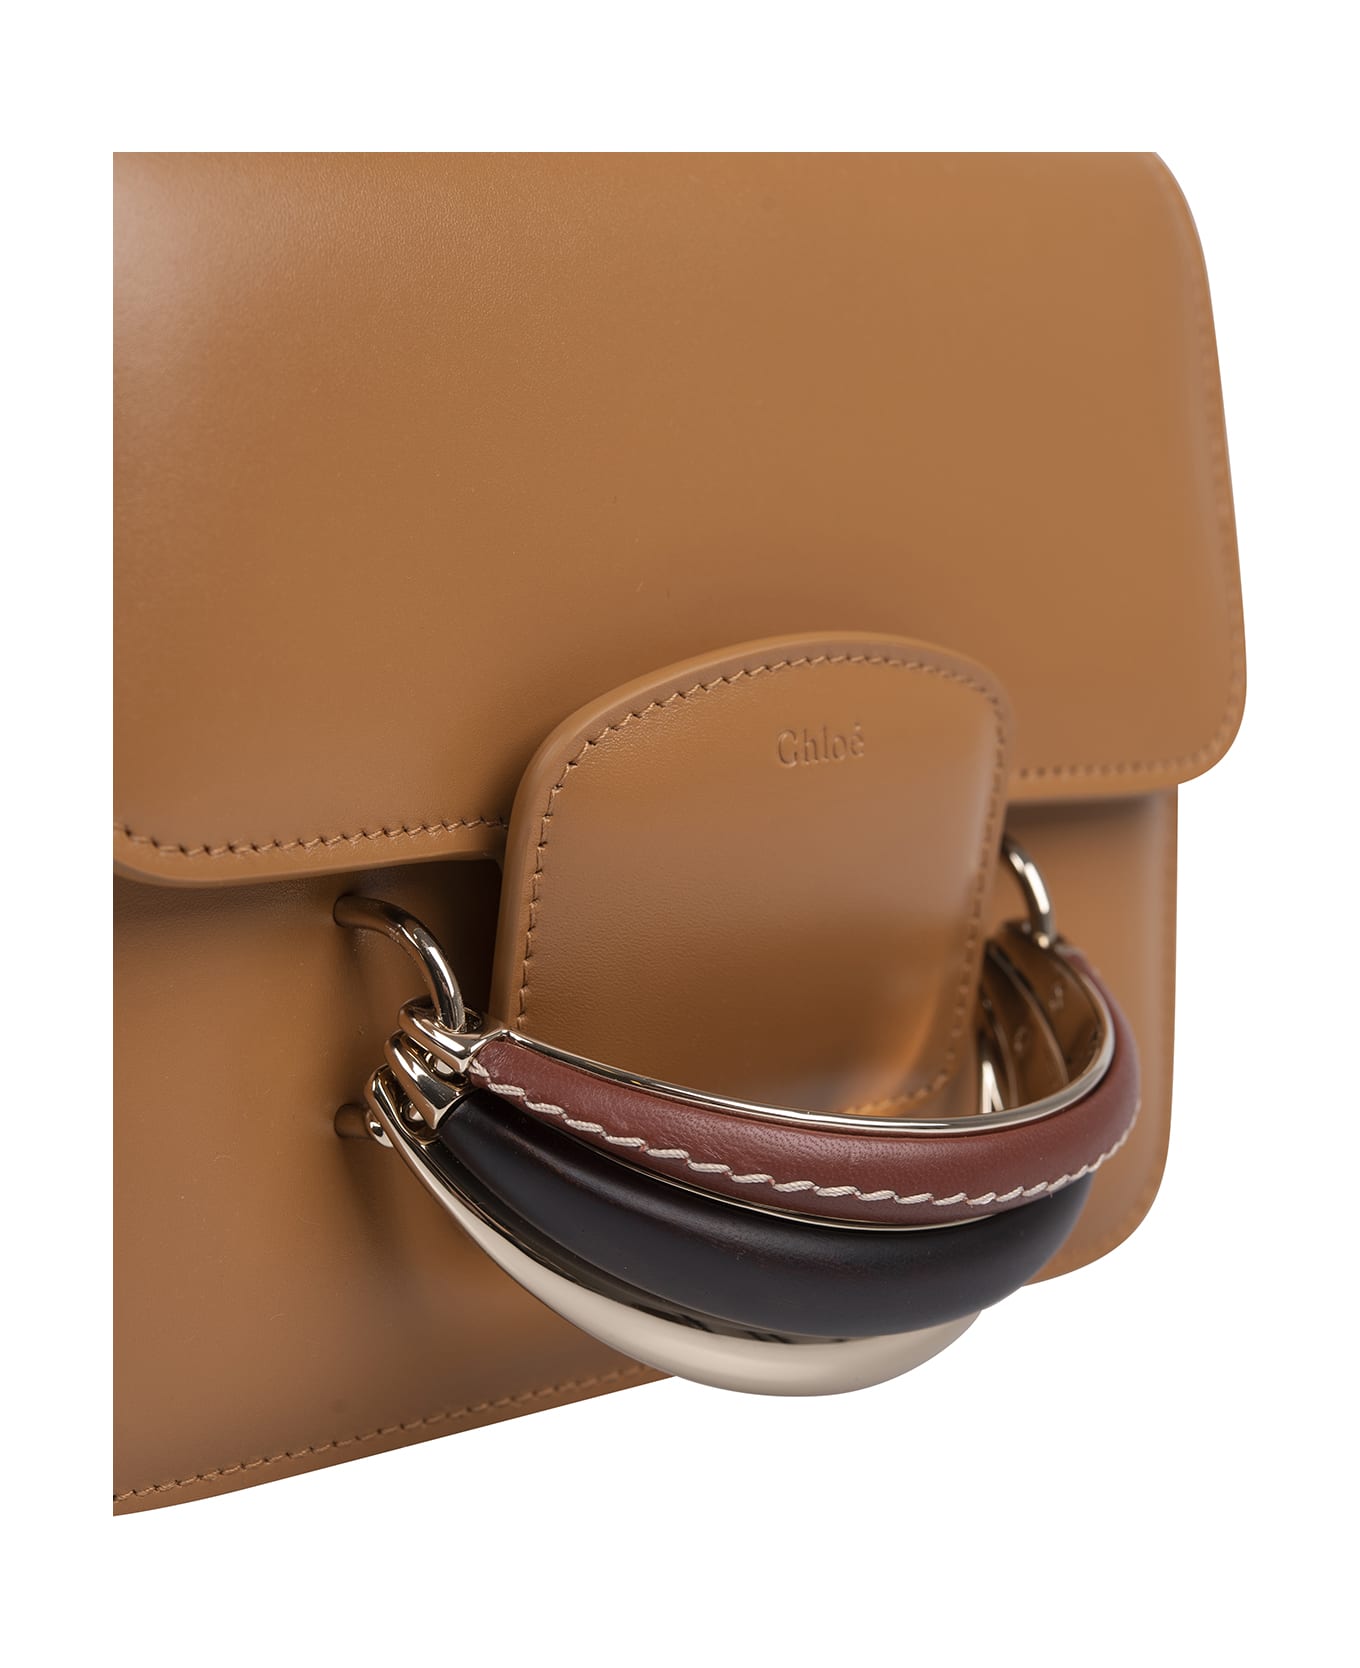 Chloé Kattie Shoulder Bag In Light Brown Shiny Leather - Autumnal brown